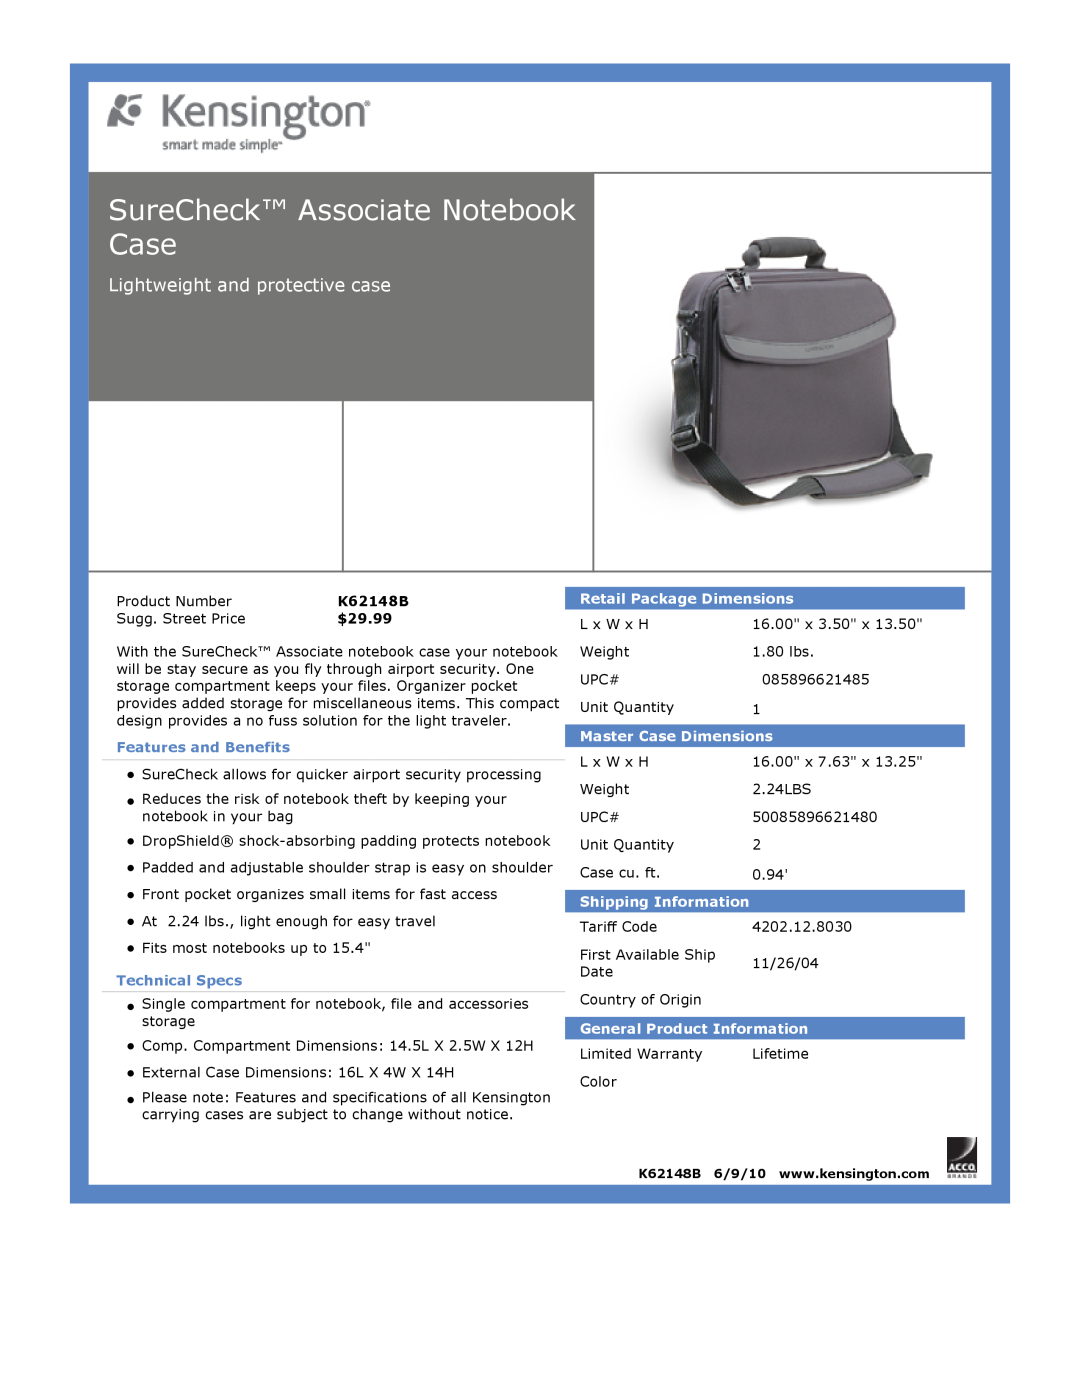 Kensington EU64325 SureCheck Associate Notebook Case, Lightweight and protective case, $29.99, Features and Benefits 